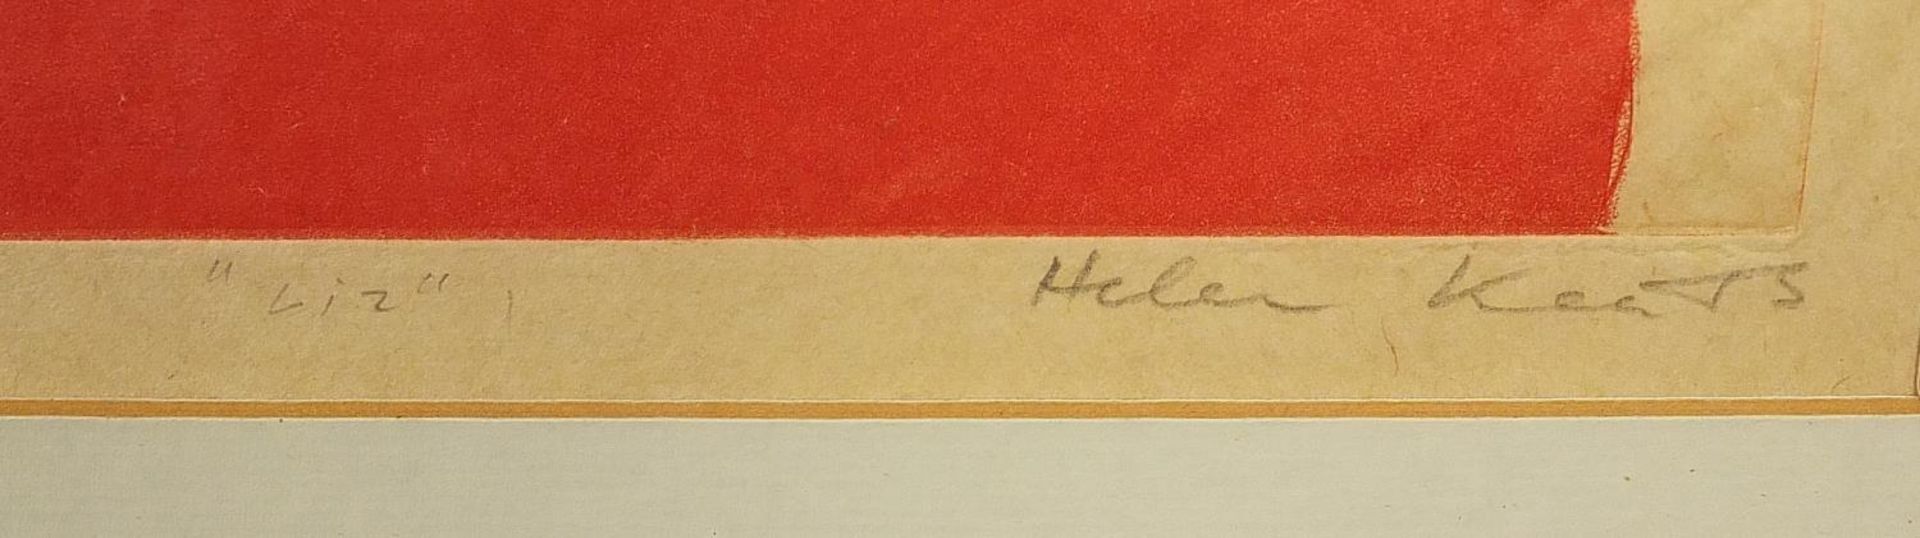 Helen Keats - Liz, pencil signed artist's proof print, mounted, framed and glazed, 40.5cm x 27cm - Image 4 of 6